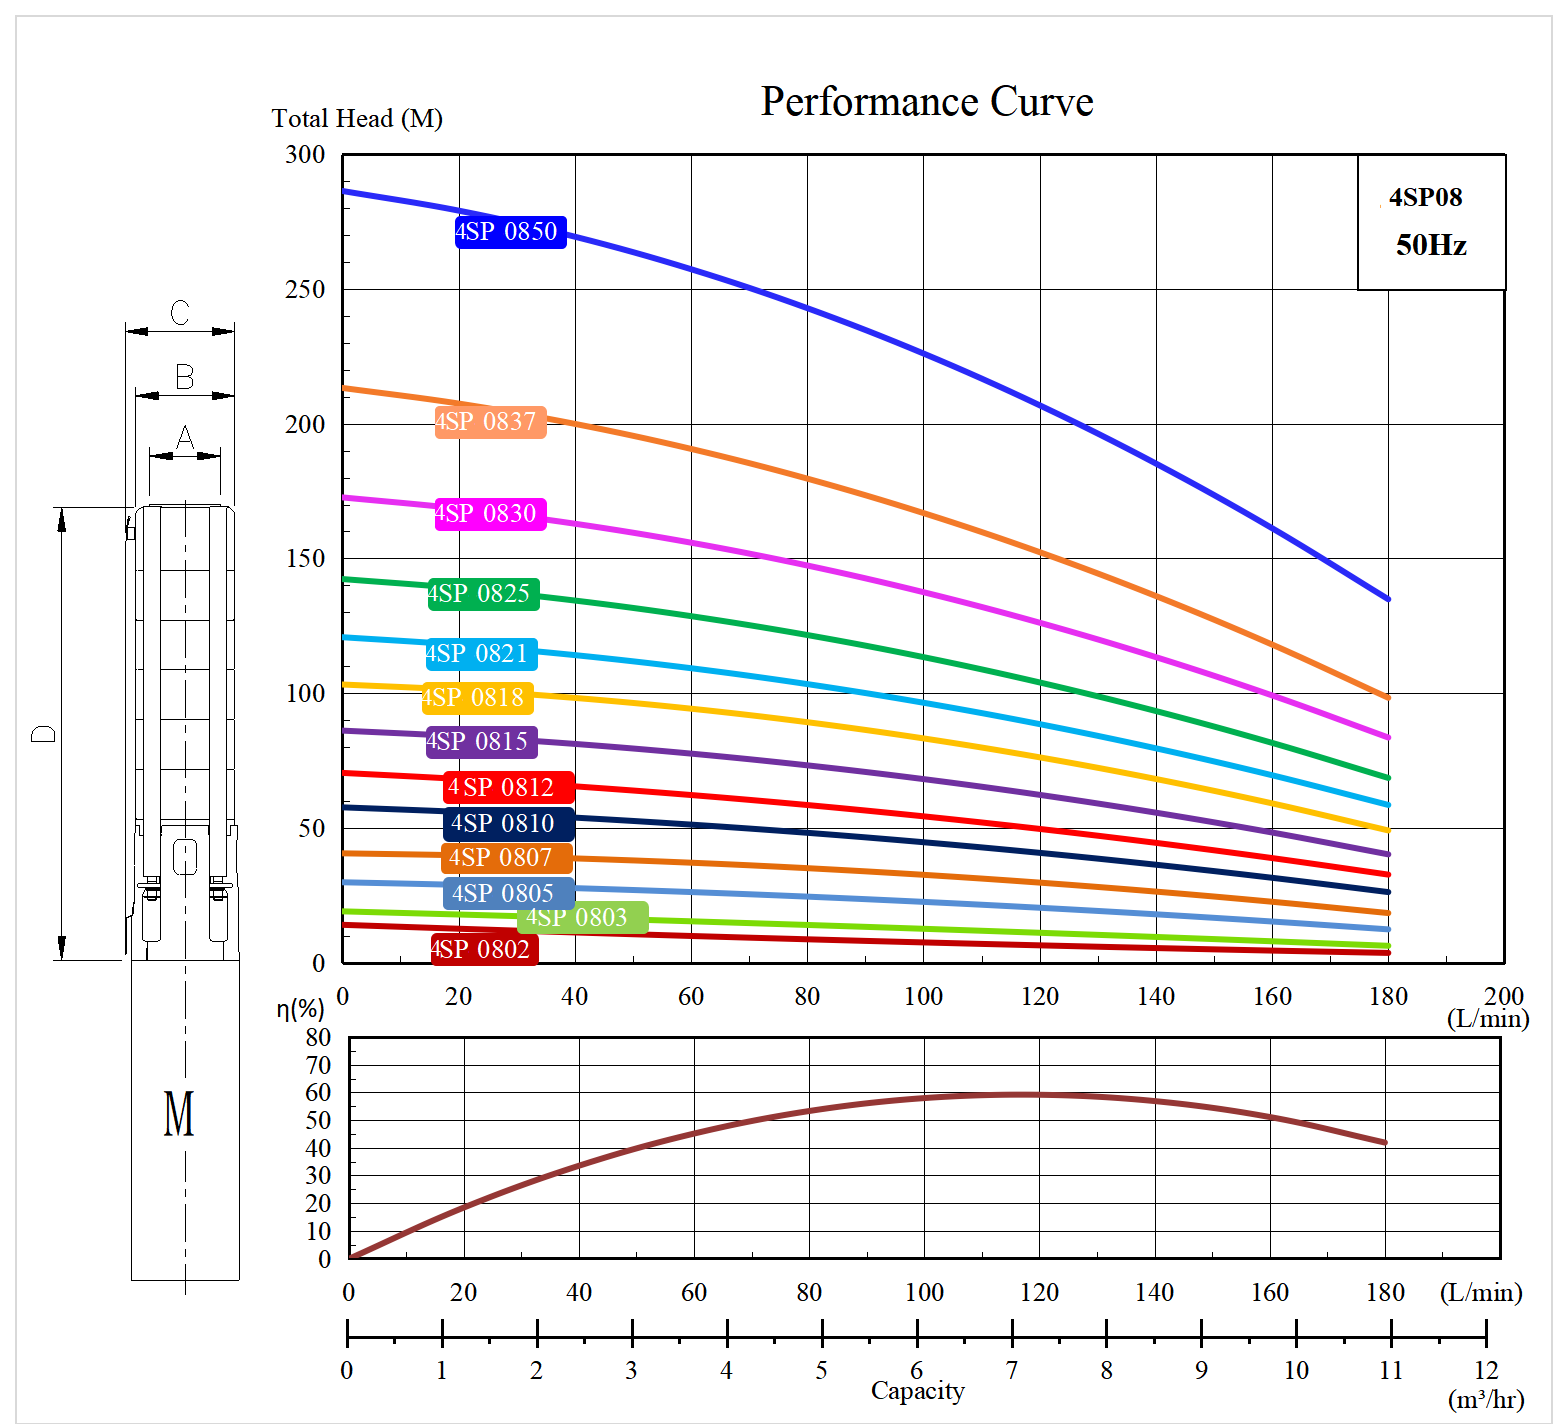  характеристики насос свердловинний 4SP0818 заміна та аналог насоса ЭЦВ5-6,5-70 